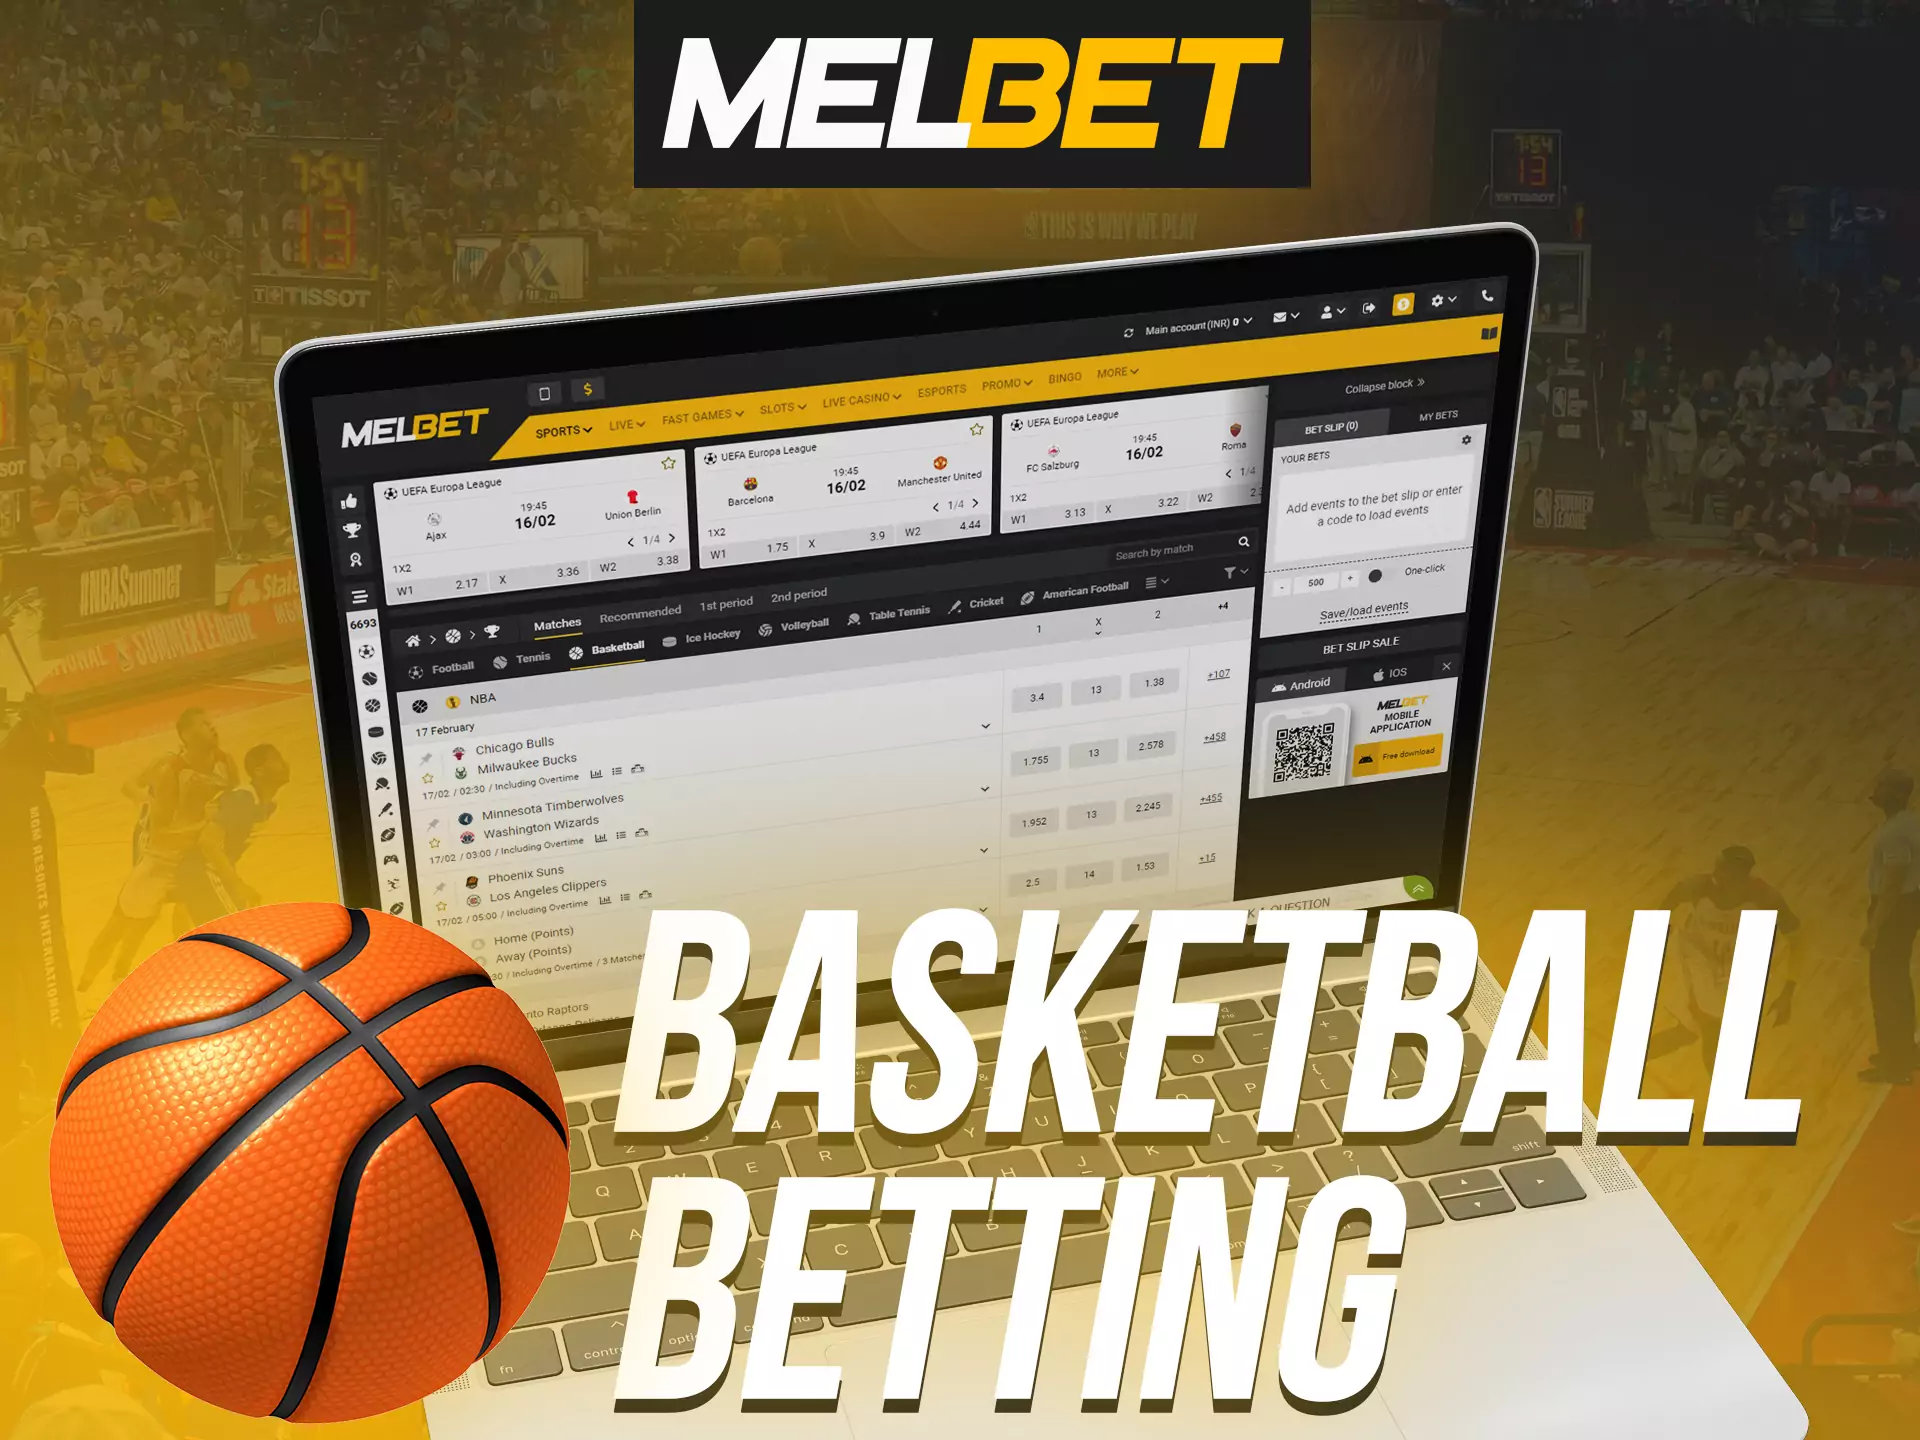 Bet on best basketball teams at Melbet.